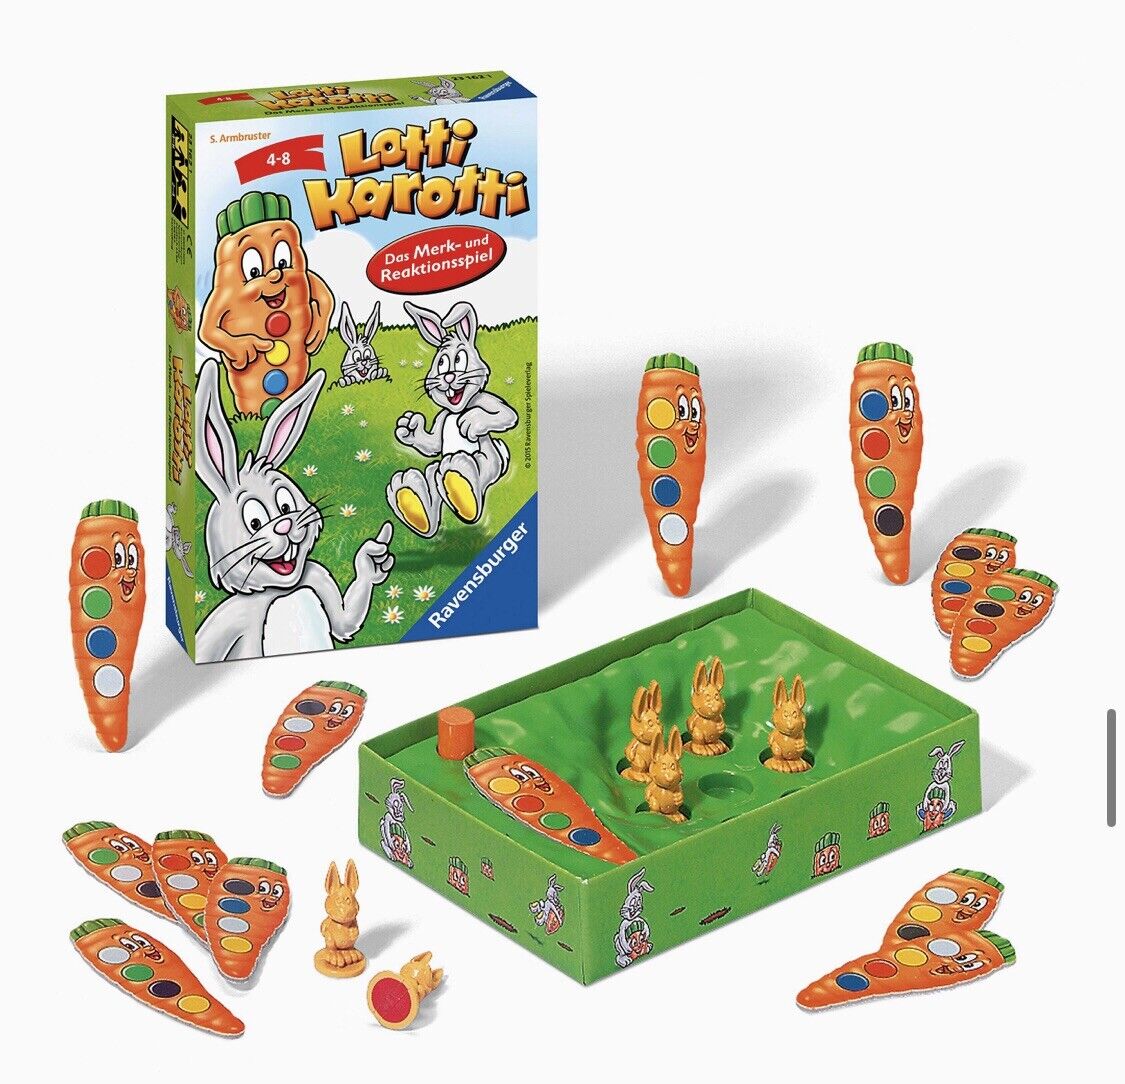 Lotti Karotti Ravensburger Fun German 4-8 – Years Store Game Rabbit Children\'s Rainbow G&S